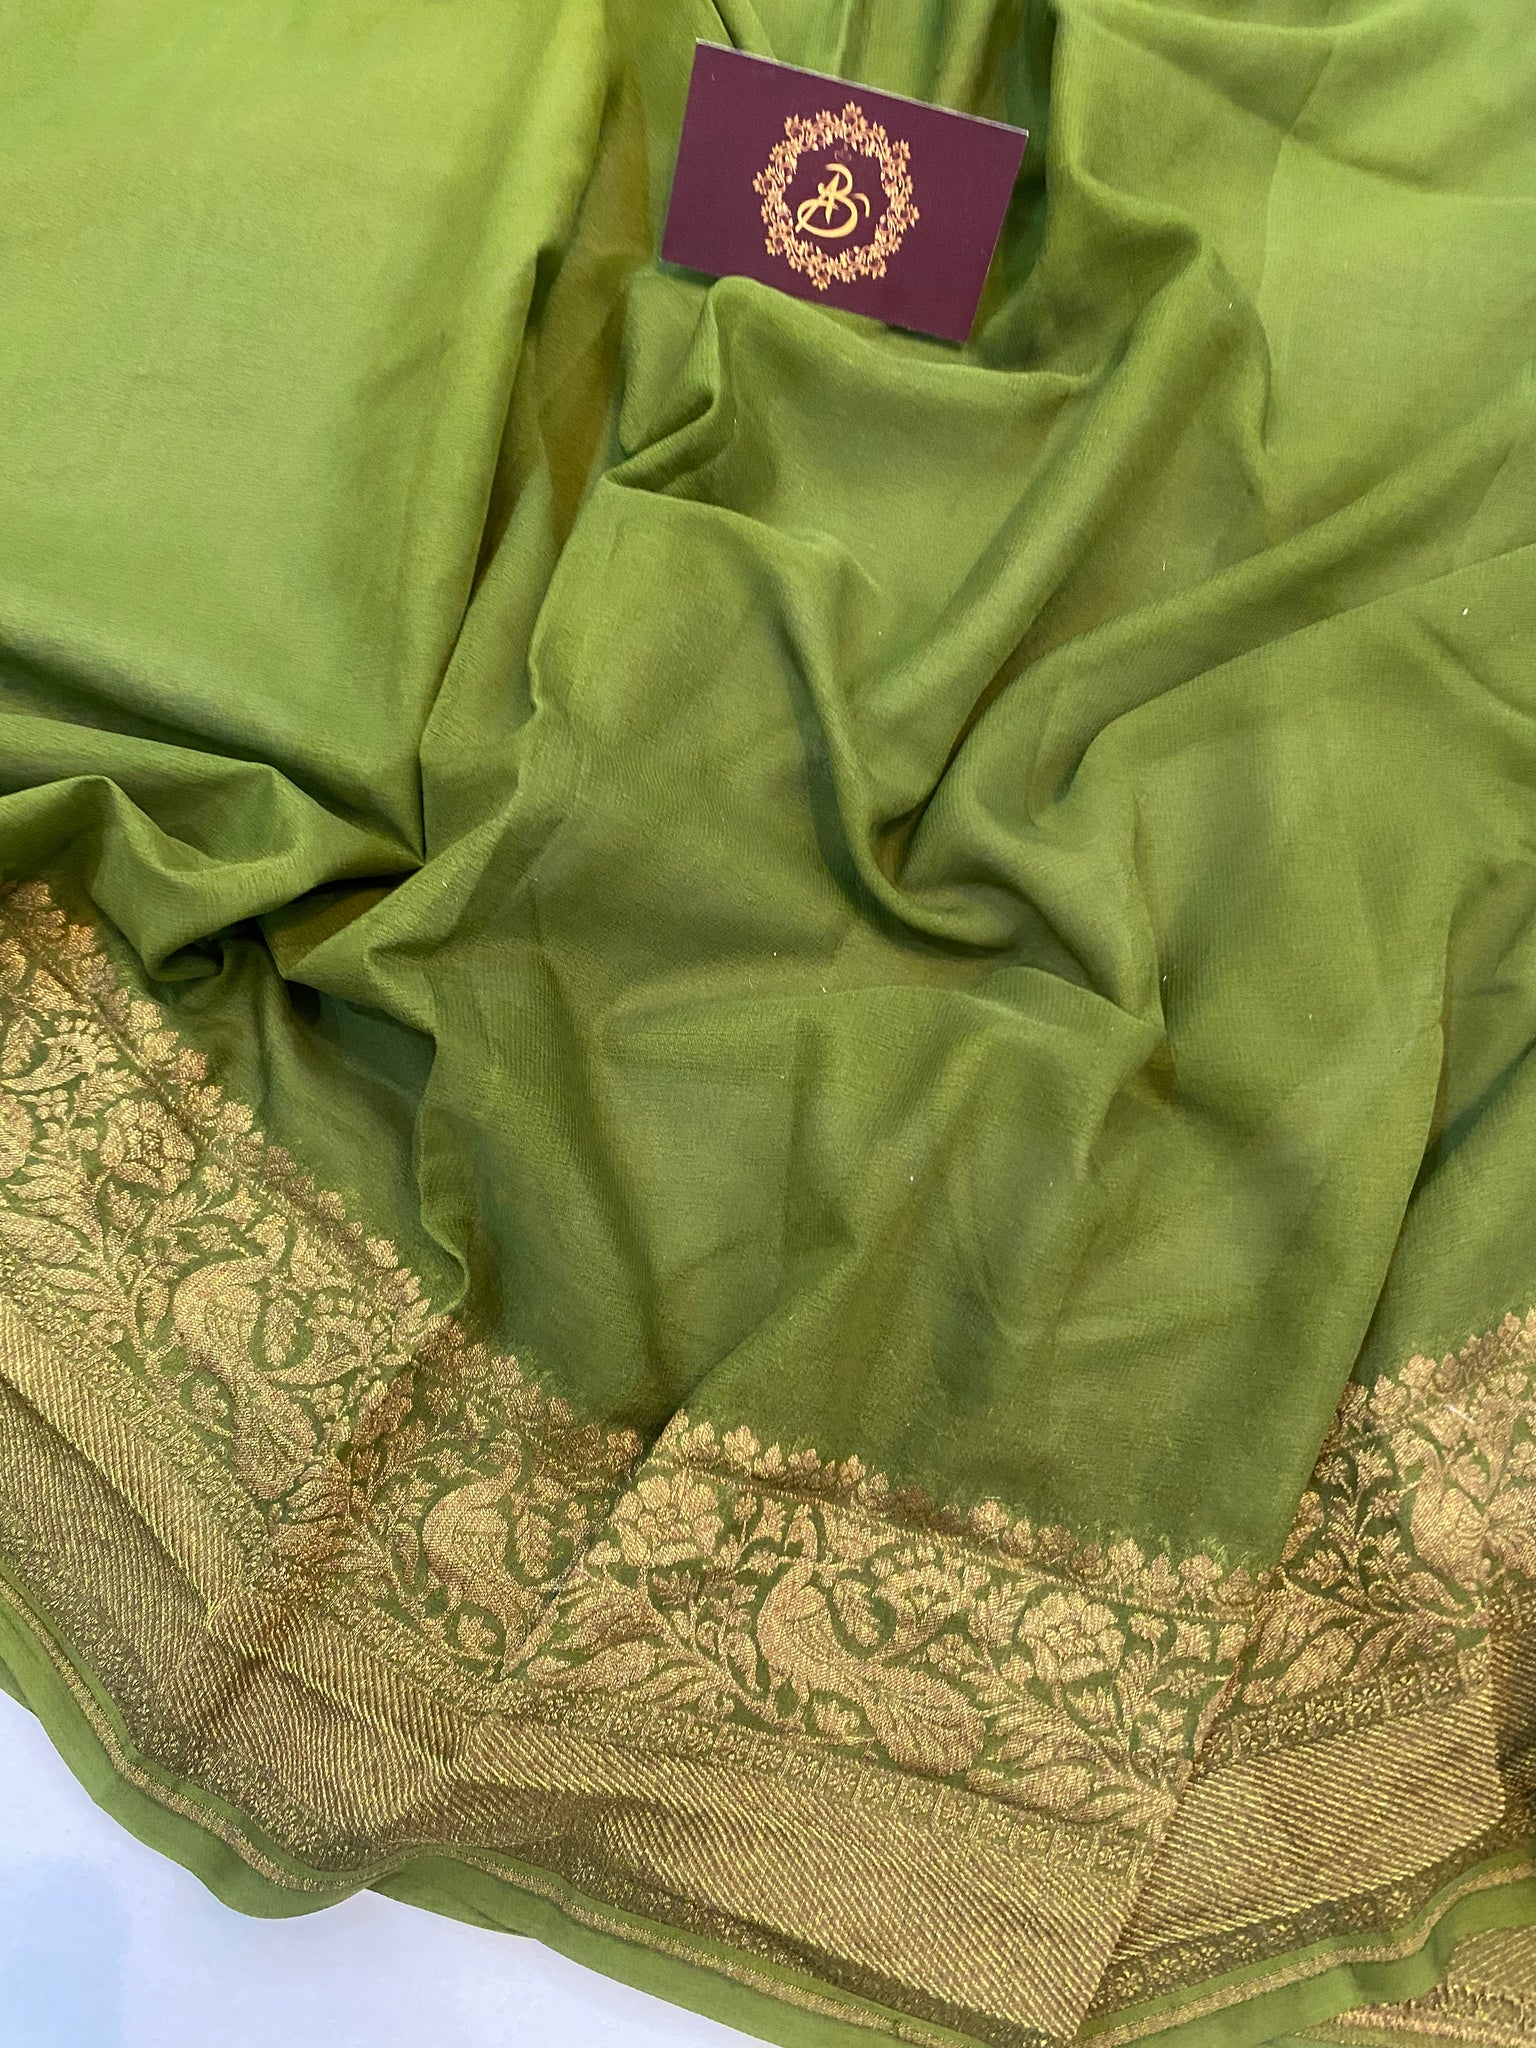 Mehendi green crepe silk resham and mirror embellished saree